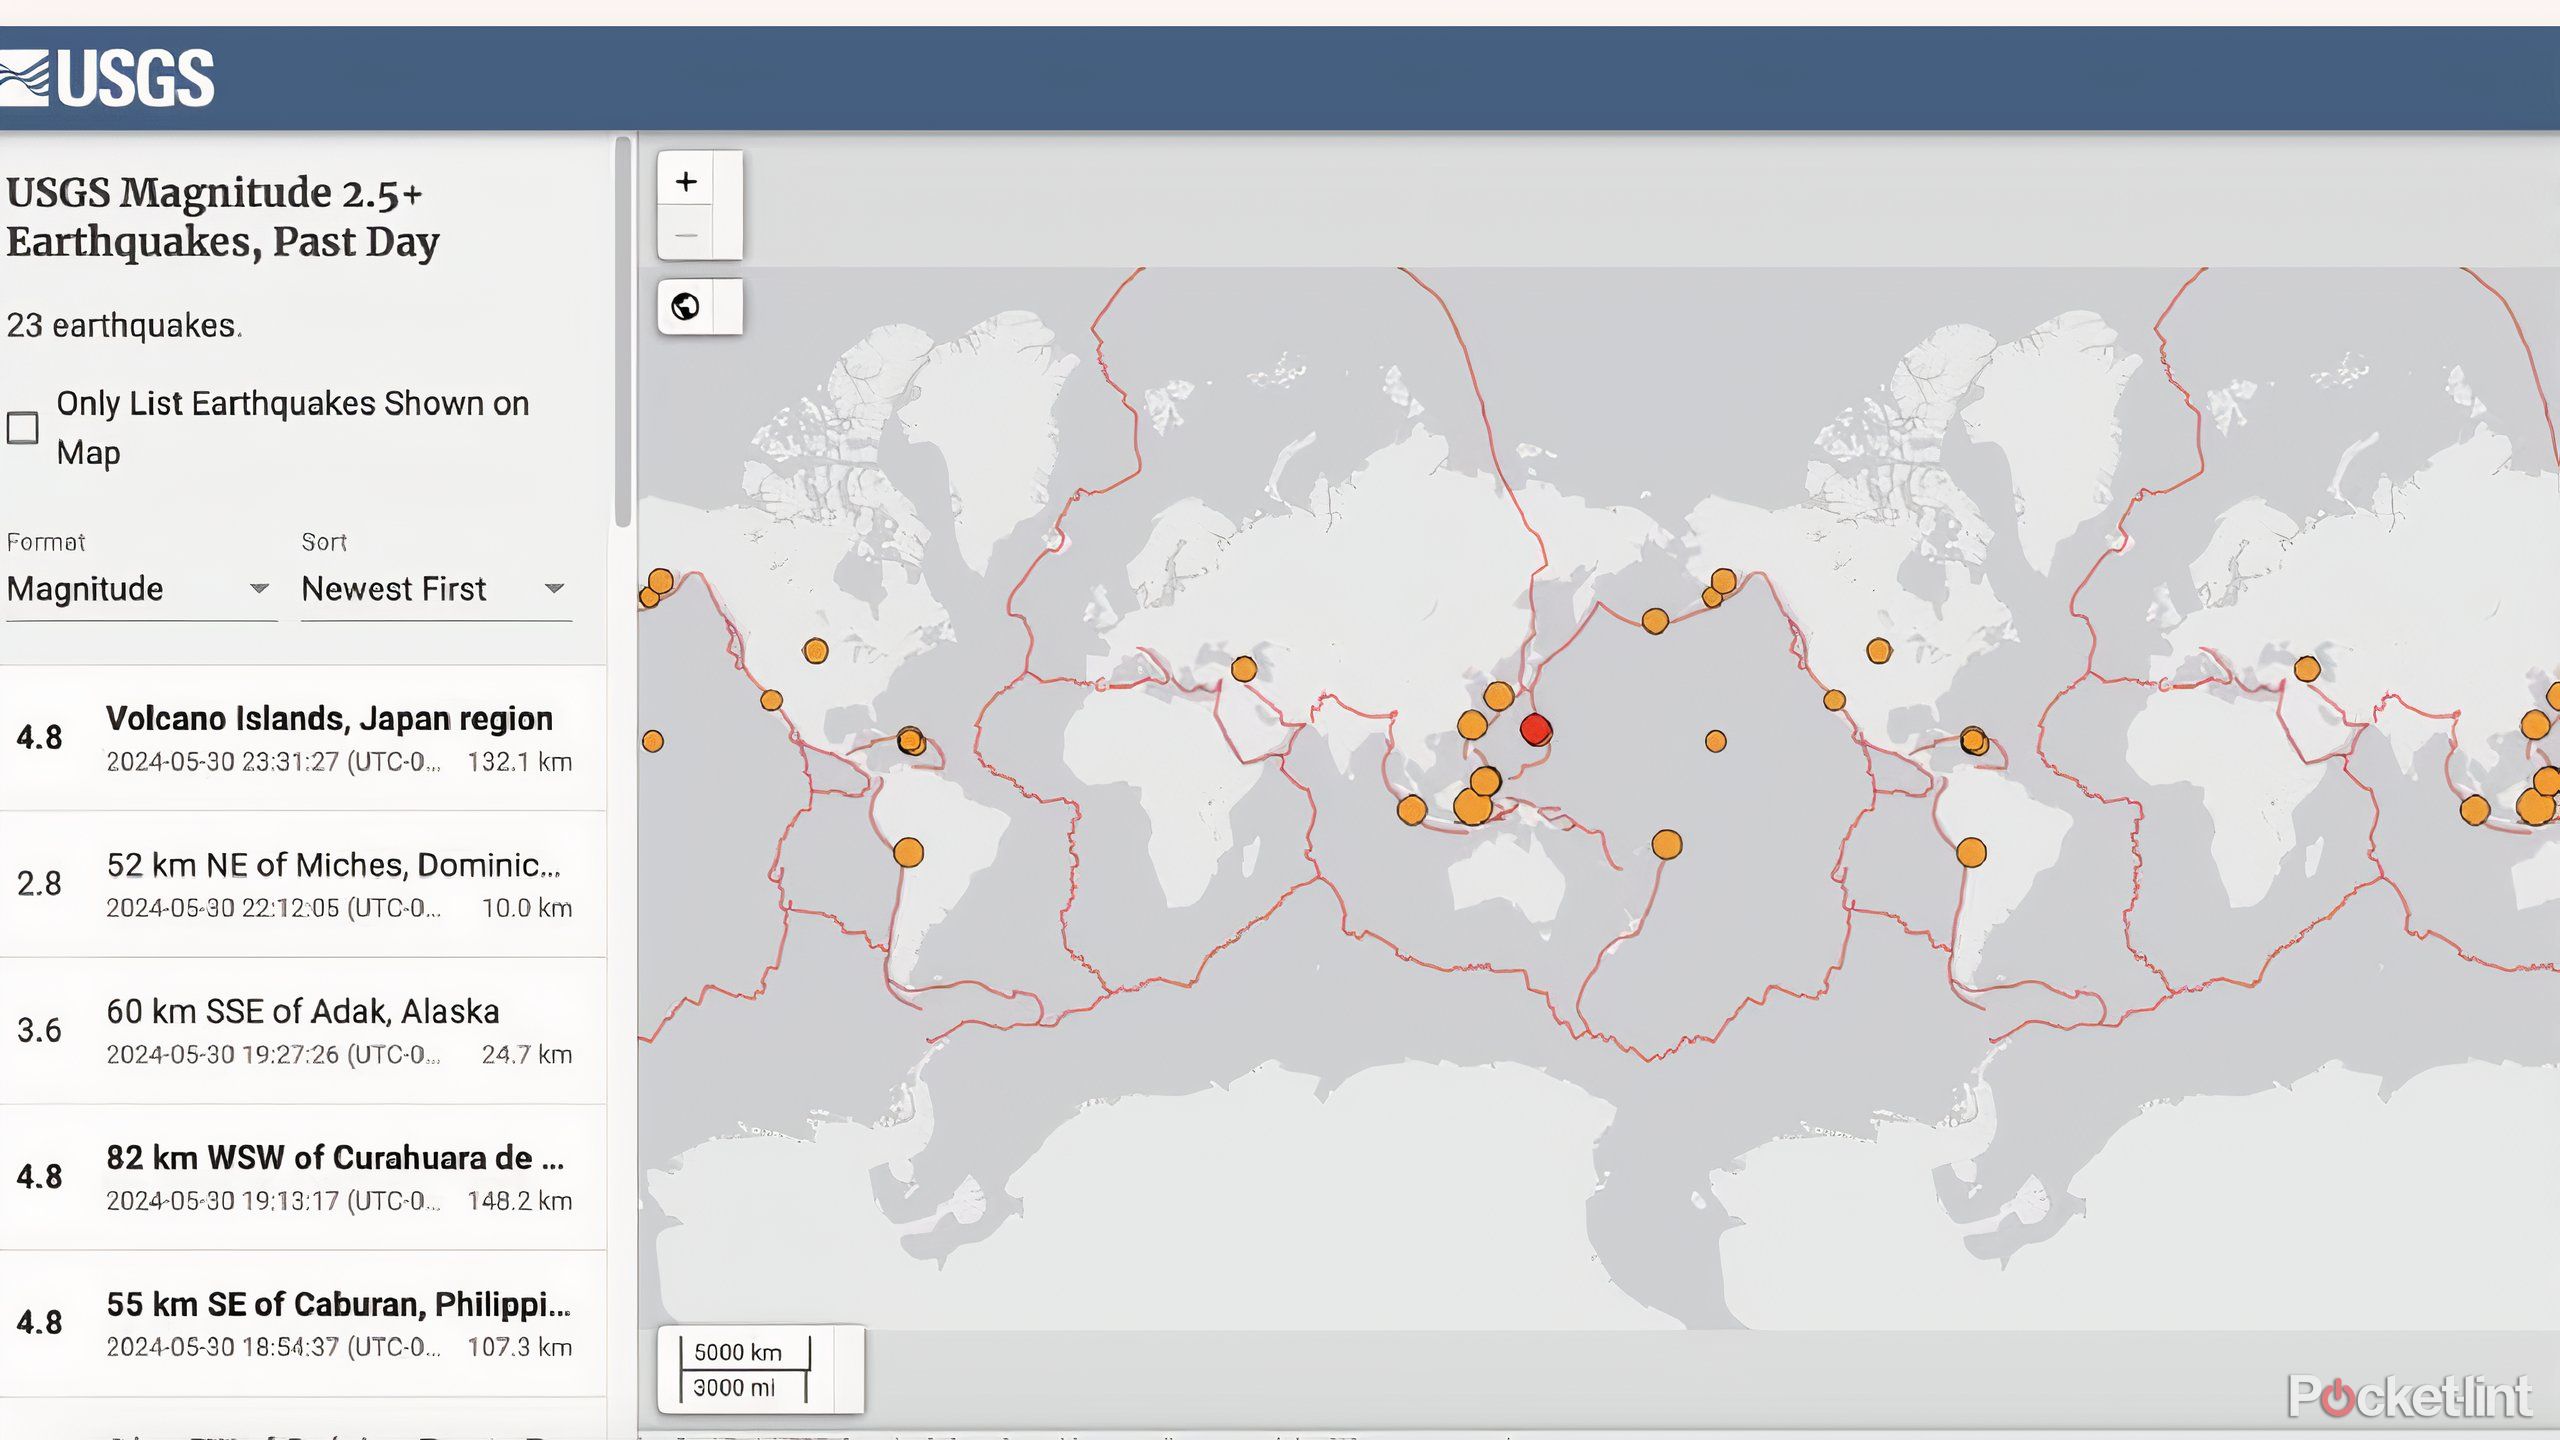 The USGS Earthquake models